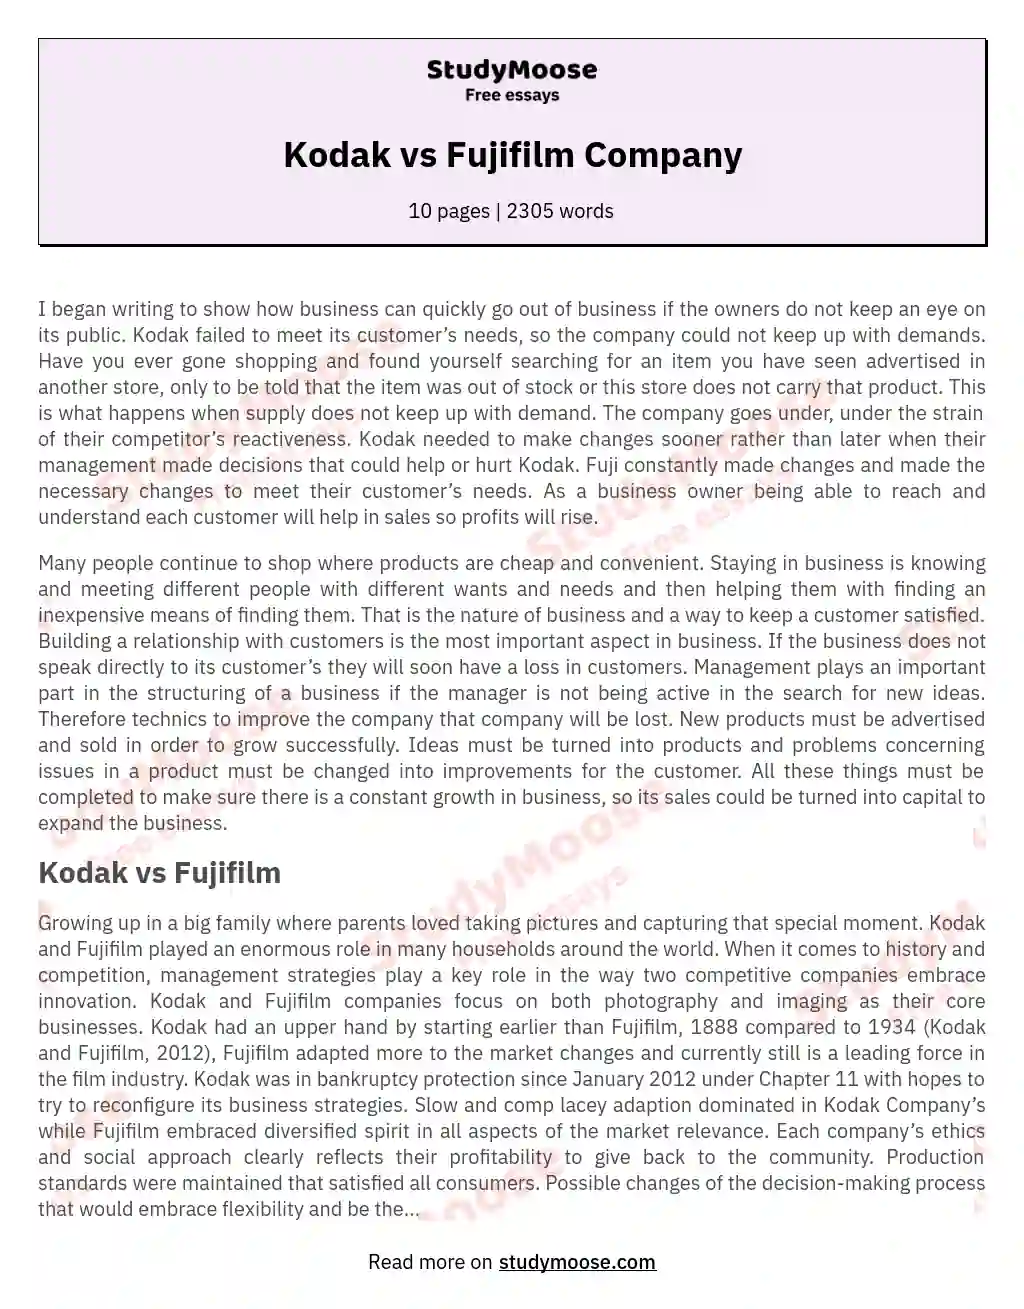 Kodak vs Fujifilm Company essay